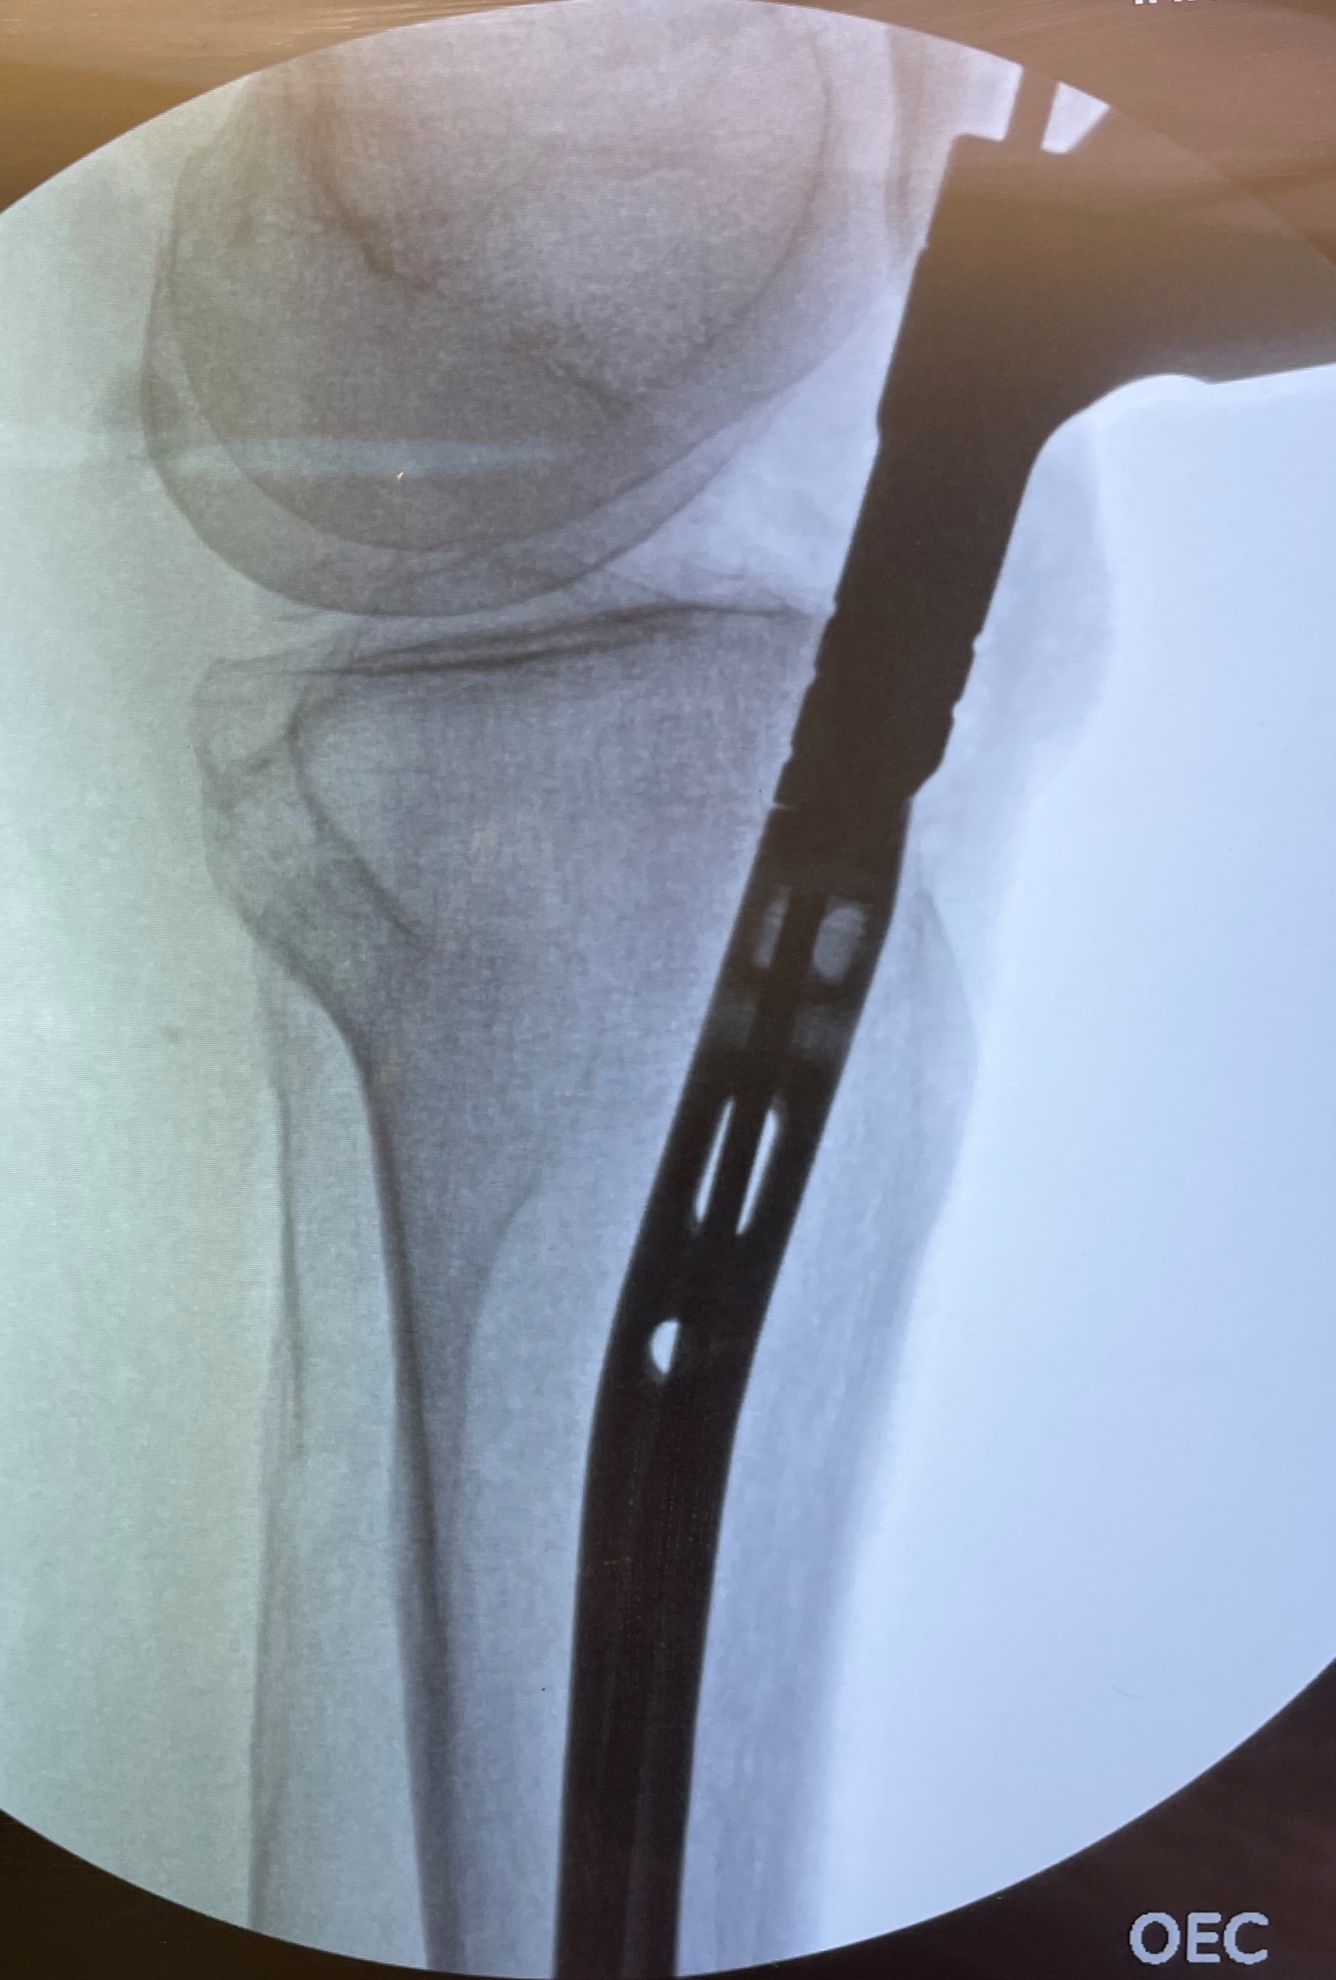 JBJS: Trifocal Tibial Bone Transport Using a Magnetic Intramedullary Nail